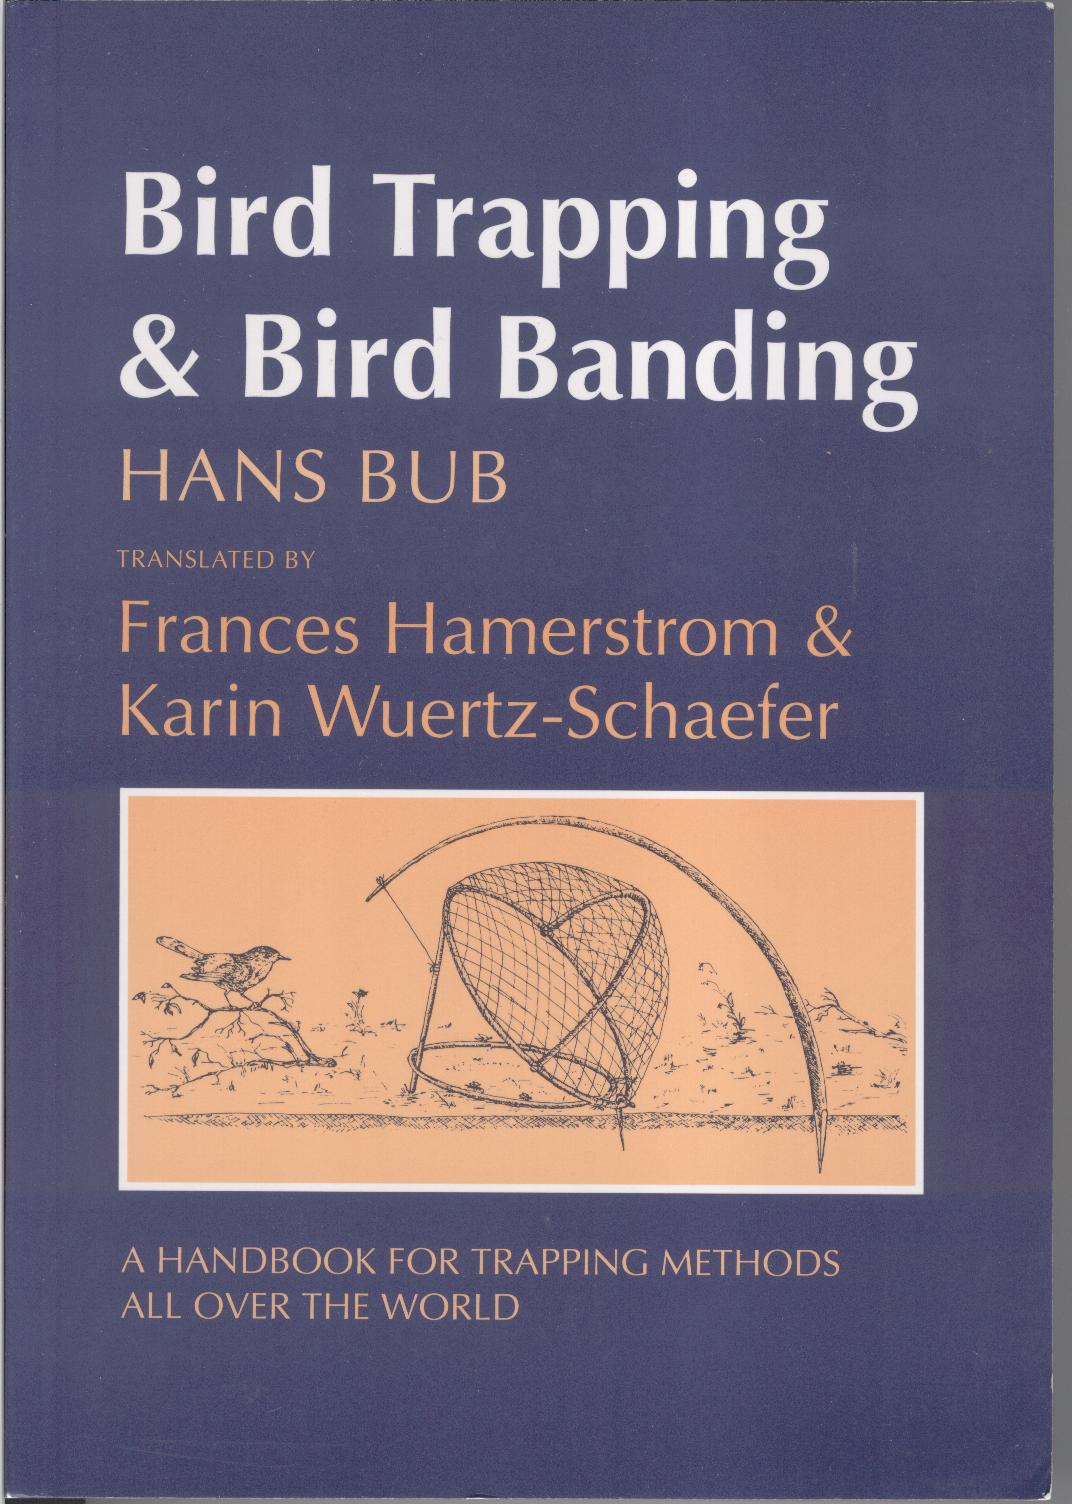 Bird Trapping & Bird Banding - Hans Bub - MED-B001